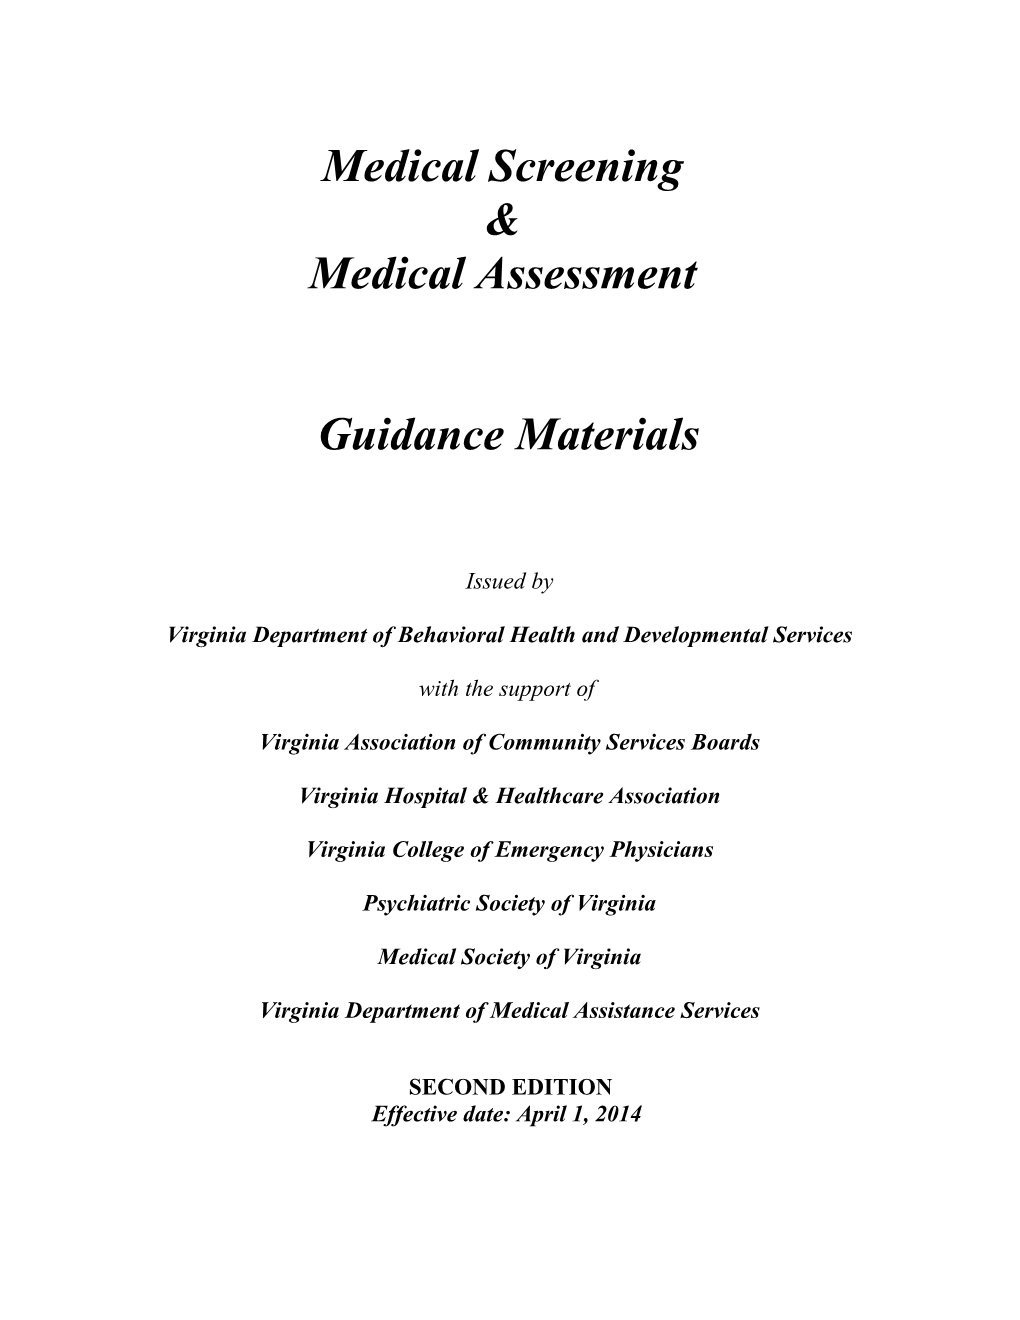 Proposed Medical Screening Protocol